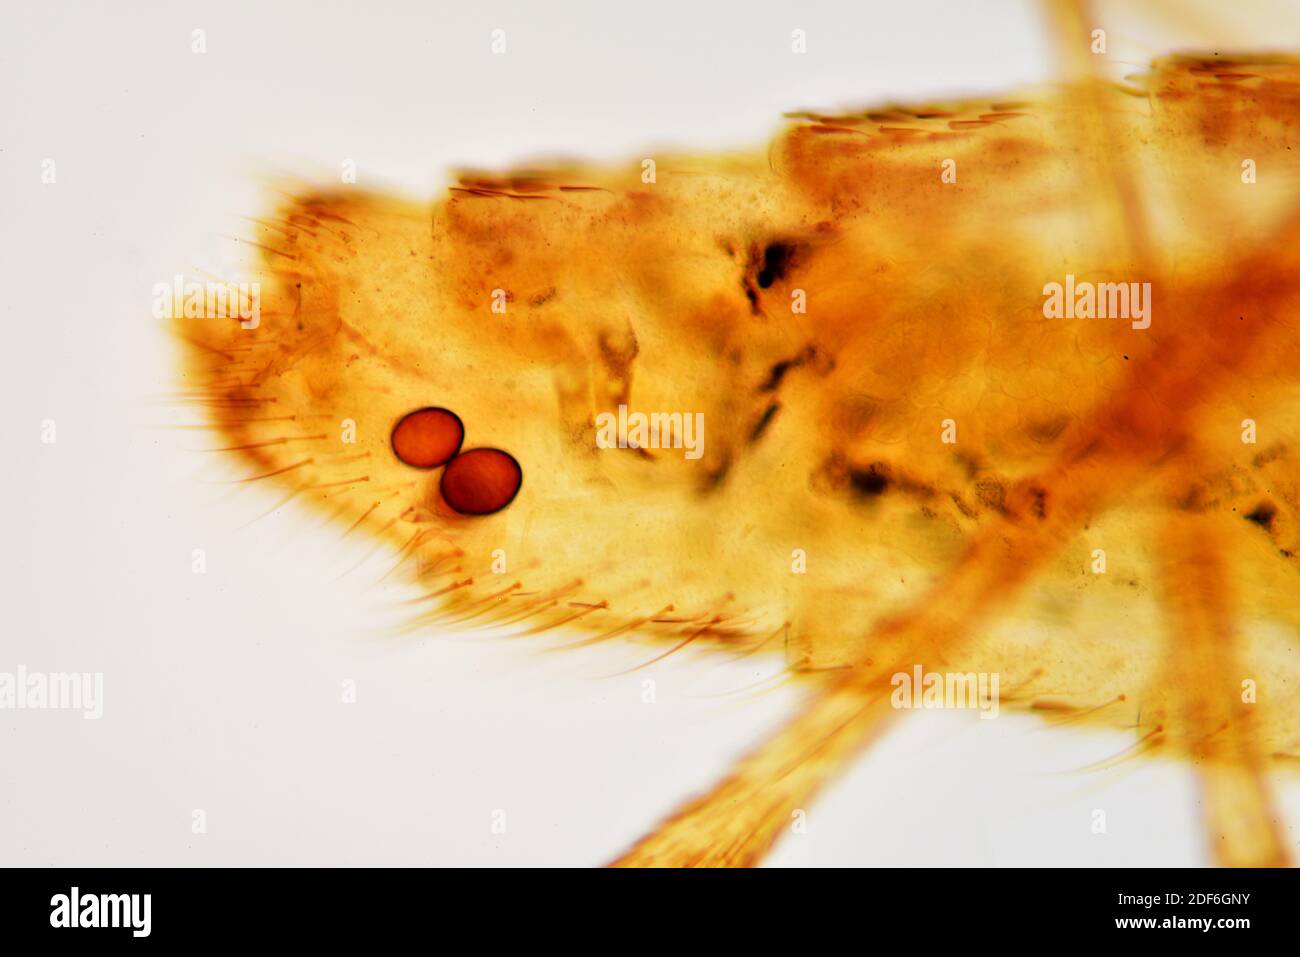 Común casa mosquito hembra (Culex pipiens), abdomen con detalle de huevos. Microscopio óptico X100. Foto de stock